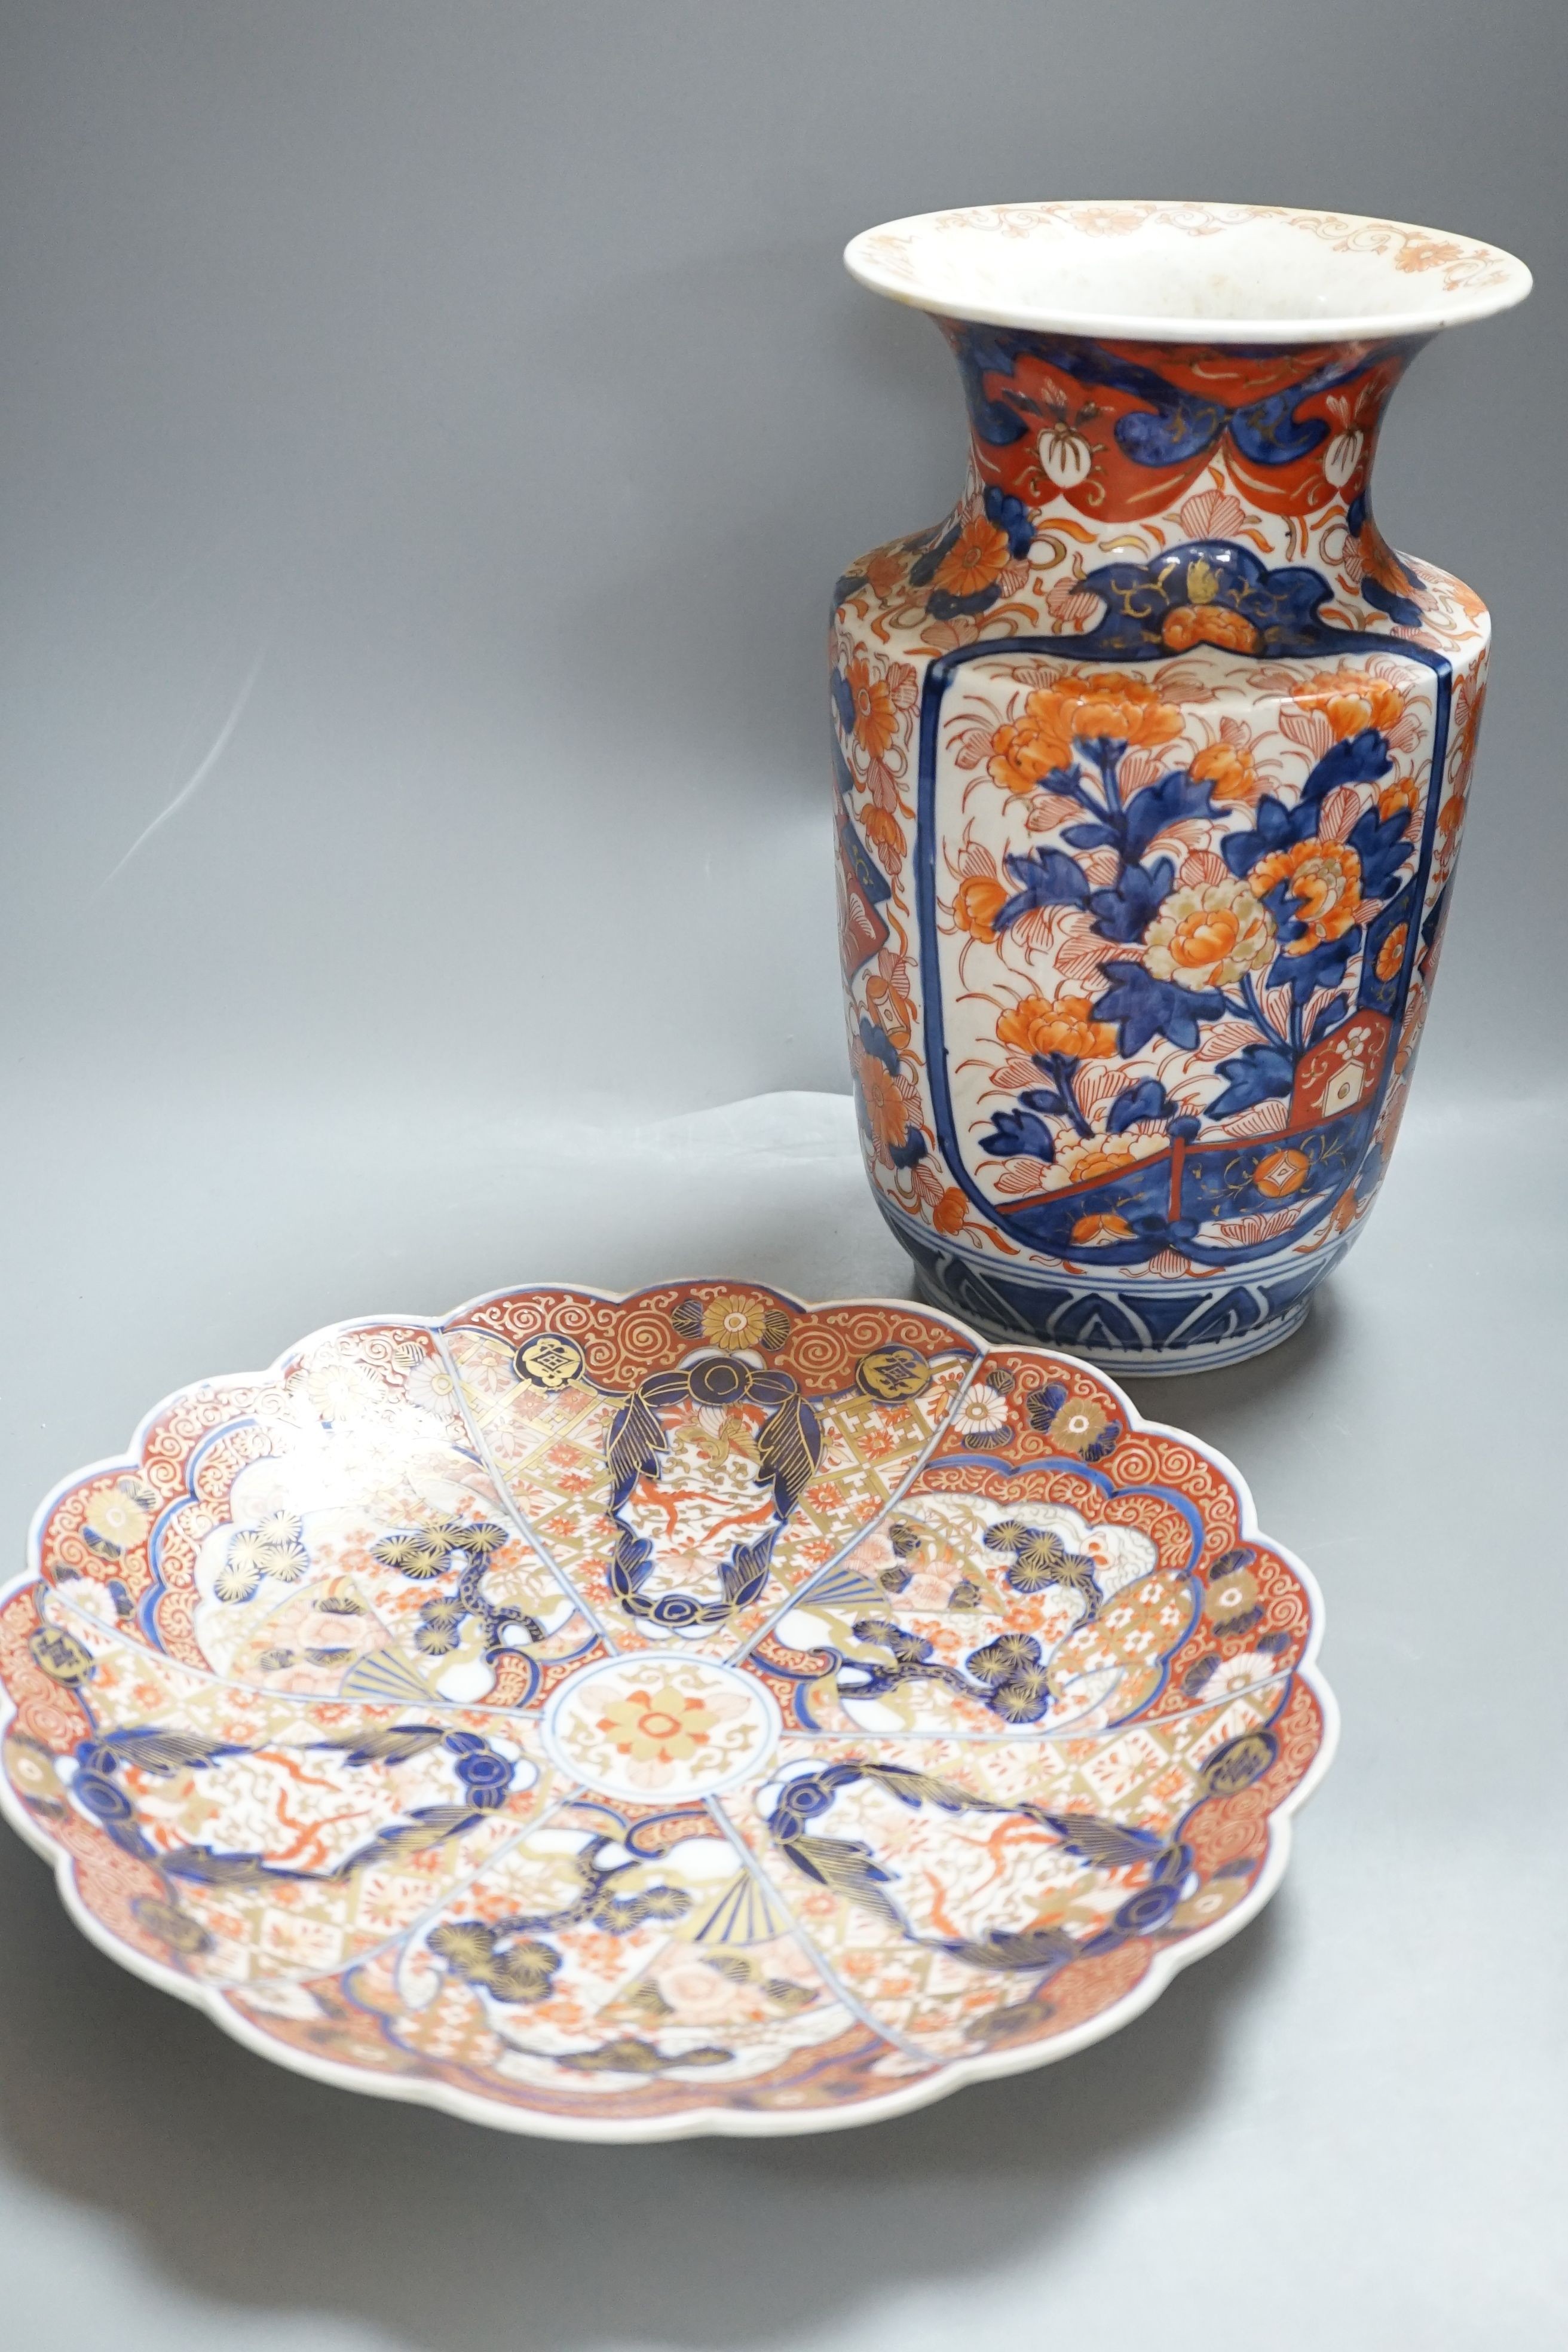 A Japanese Imari vase, 31cm tall, and an Imari dish, both Meiji period